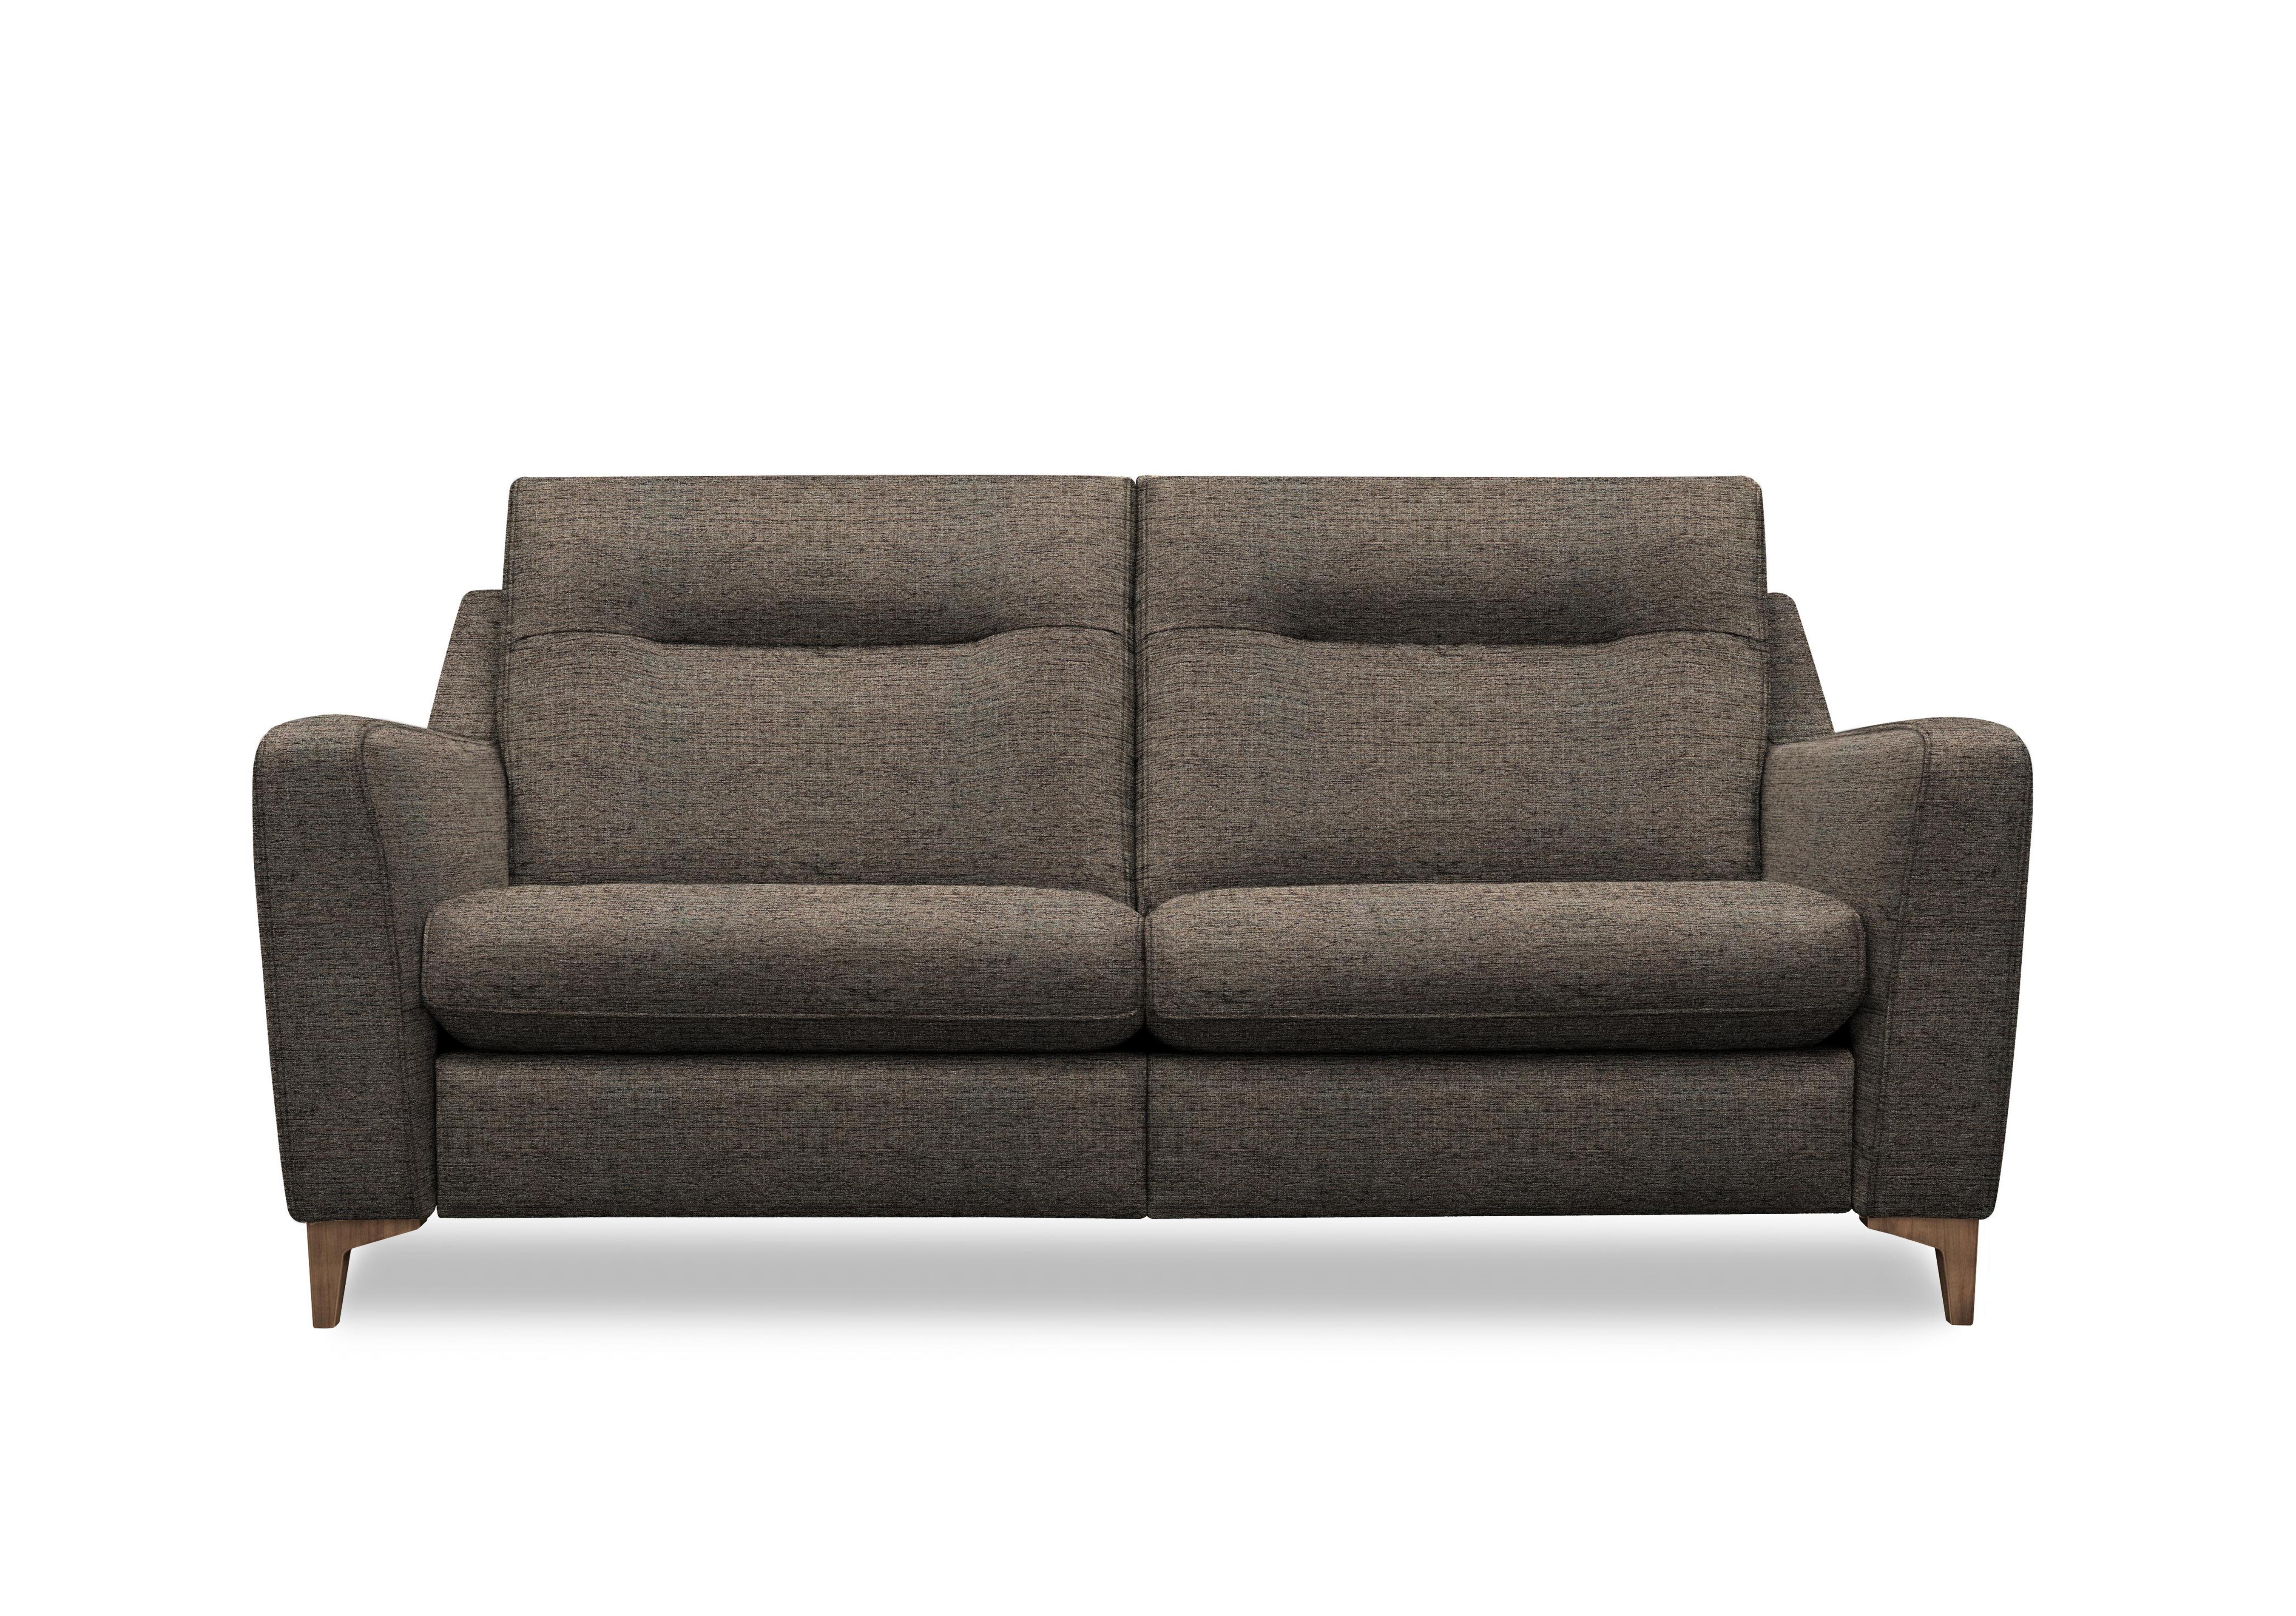 Arlo 3 Seater Fabric Sofa in A008 Yarn Slate Wal Ft on Furniture Village